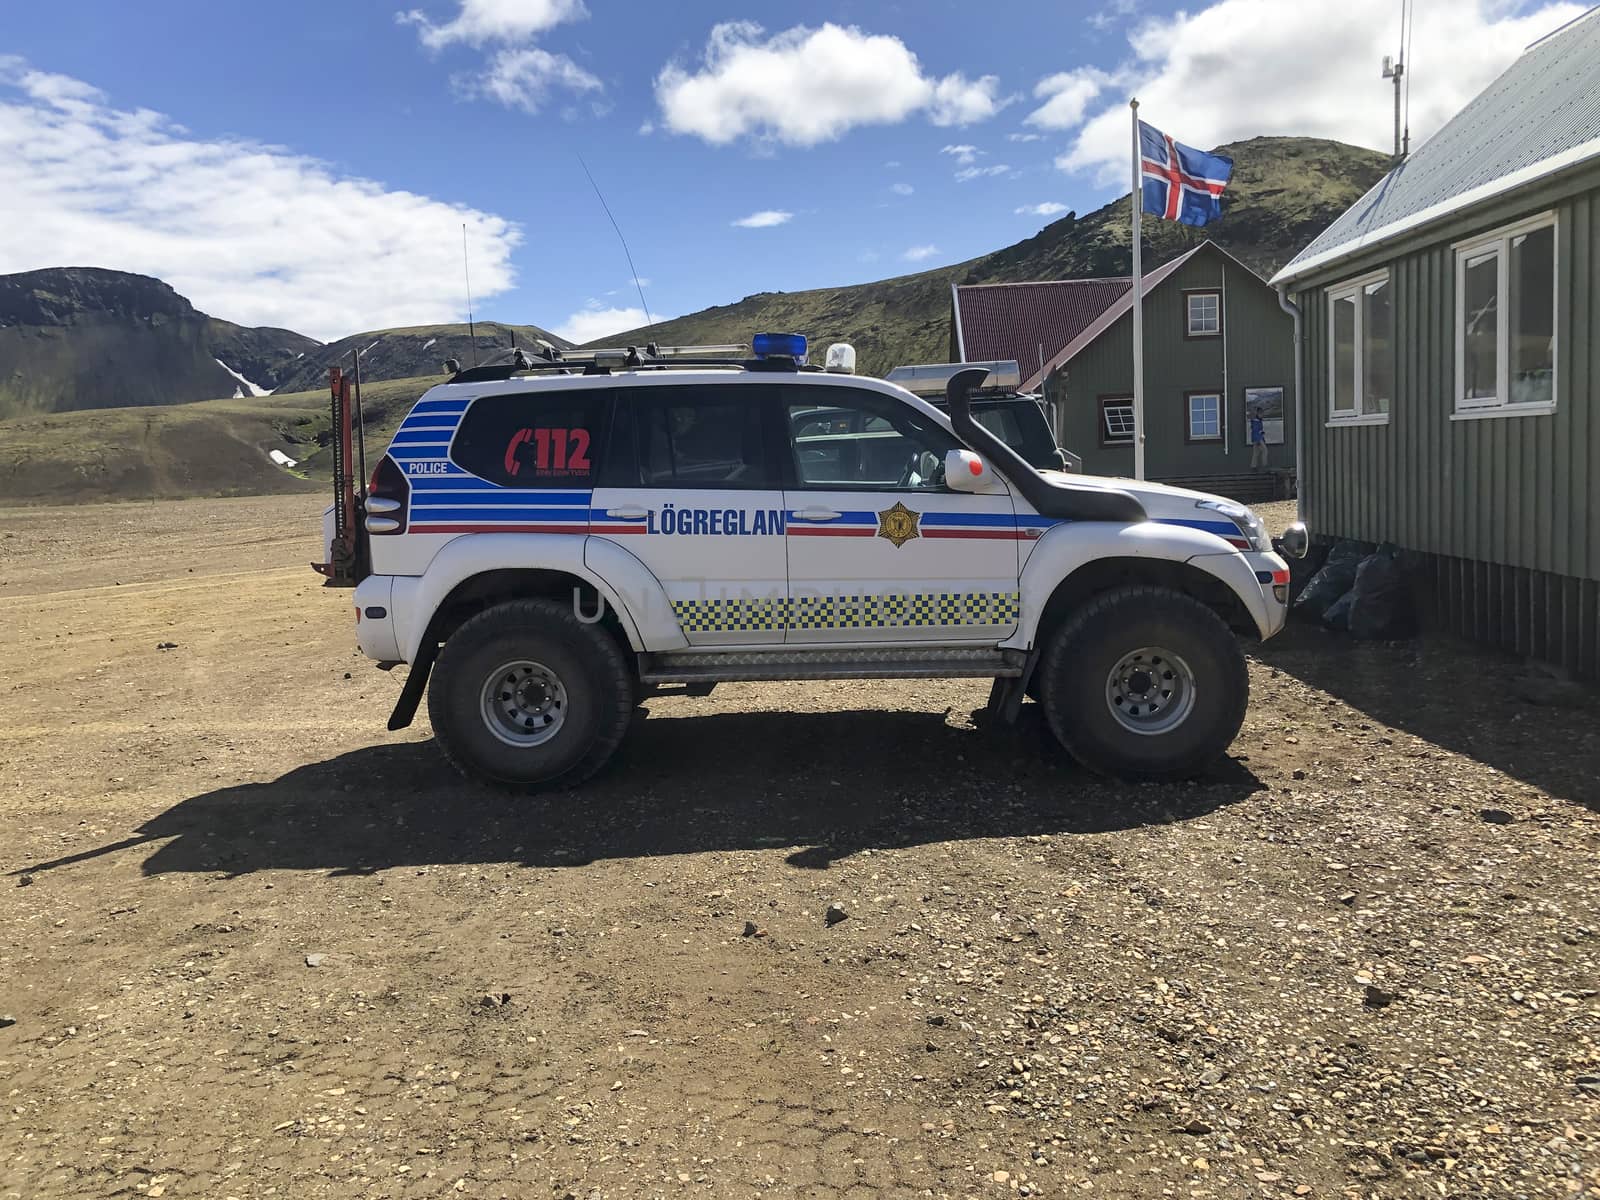 Icelandic police patrol super jeep in region logreglan, parked in front of hiker's hut by kb79